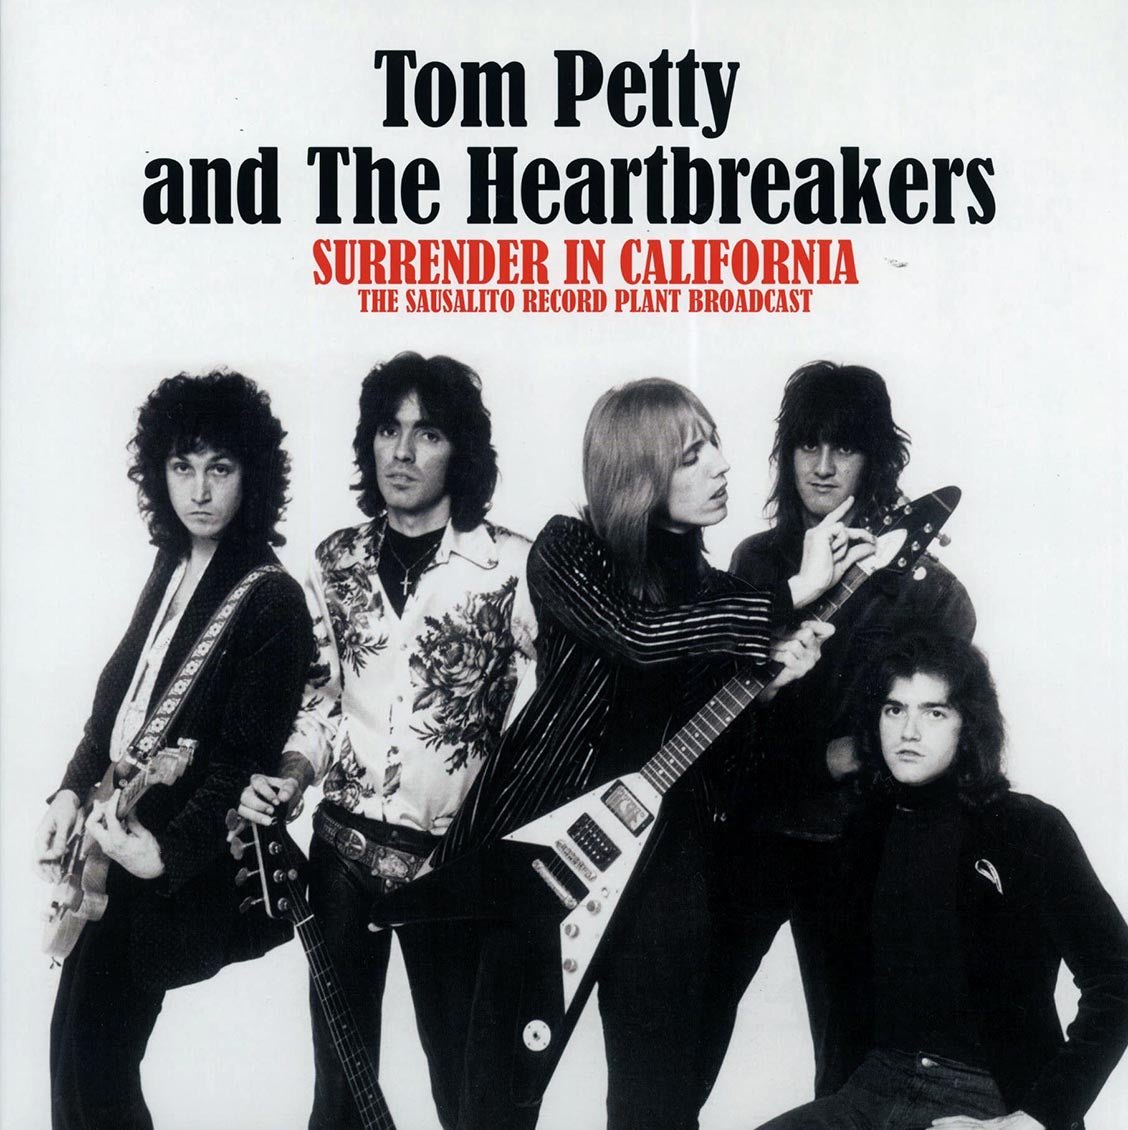 Tom Petty & The Heartbreakers - Surrender In California: The Sausalito Record Plant Broadcast - Vinyl LP